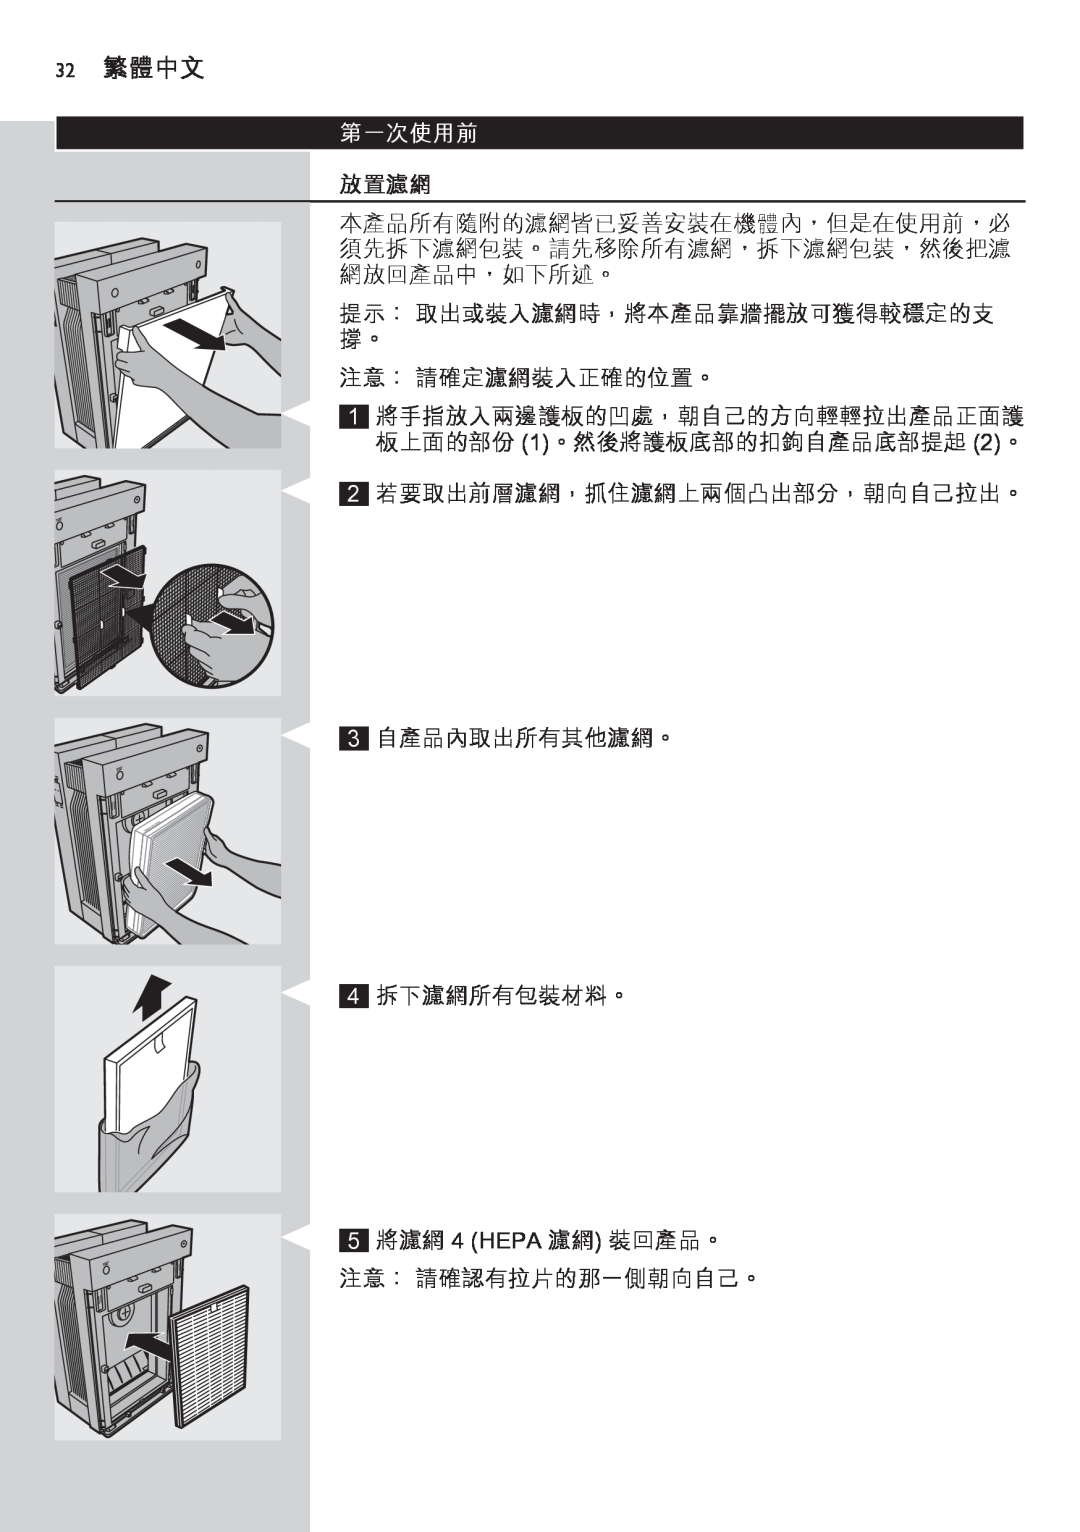 Philips AC4083 manual 32繁體中文, 第一次使用前, 放置濾網 